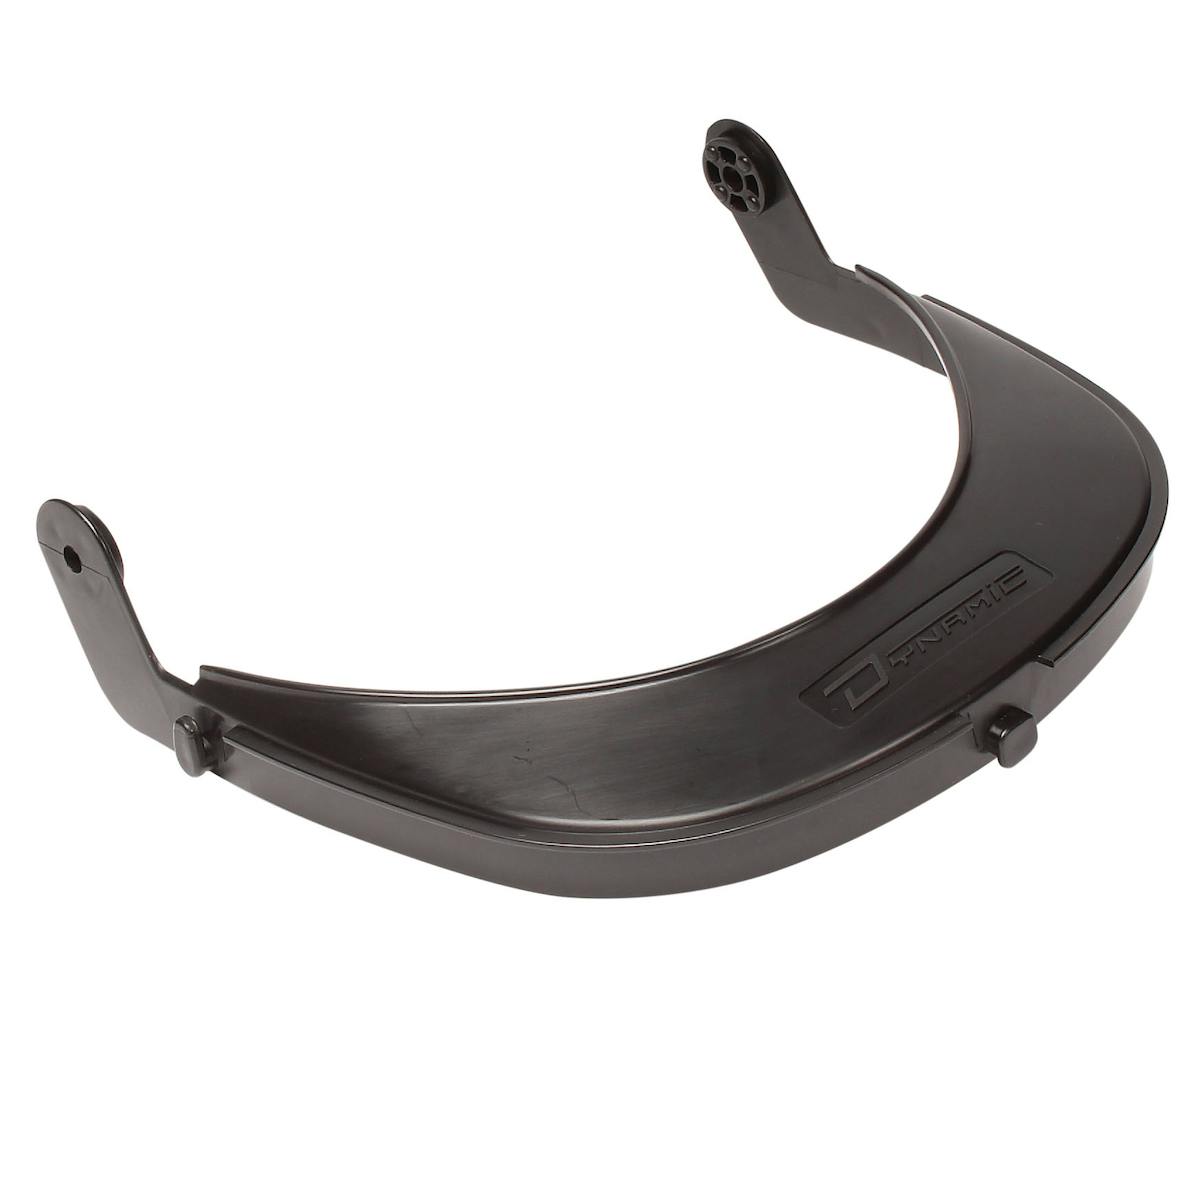 Face shield bracket for HP940 bump cap, Black (251-EPB940) - OS